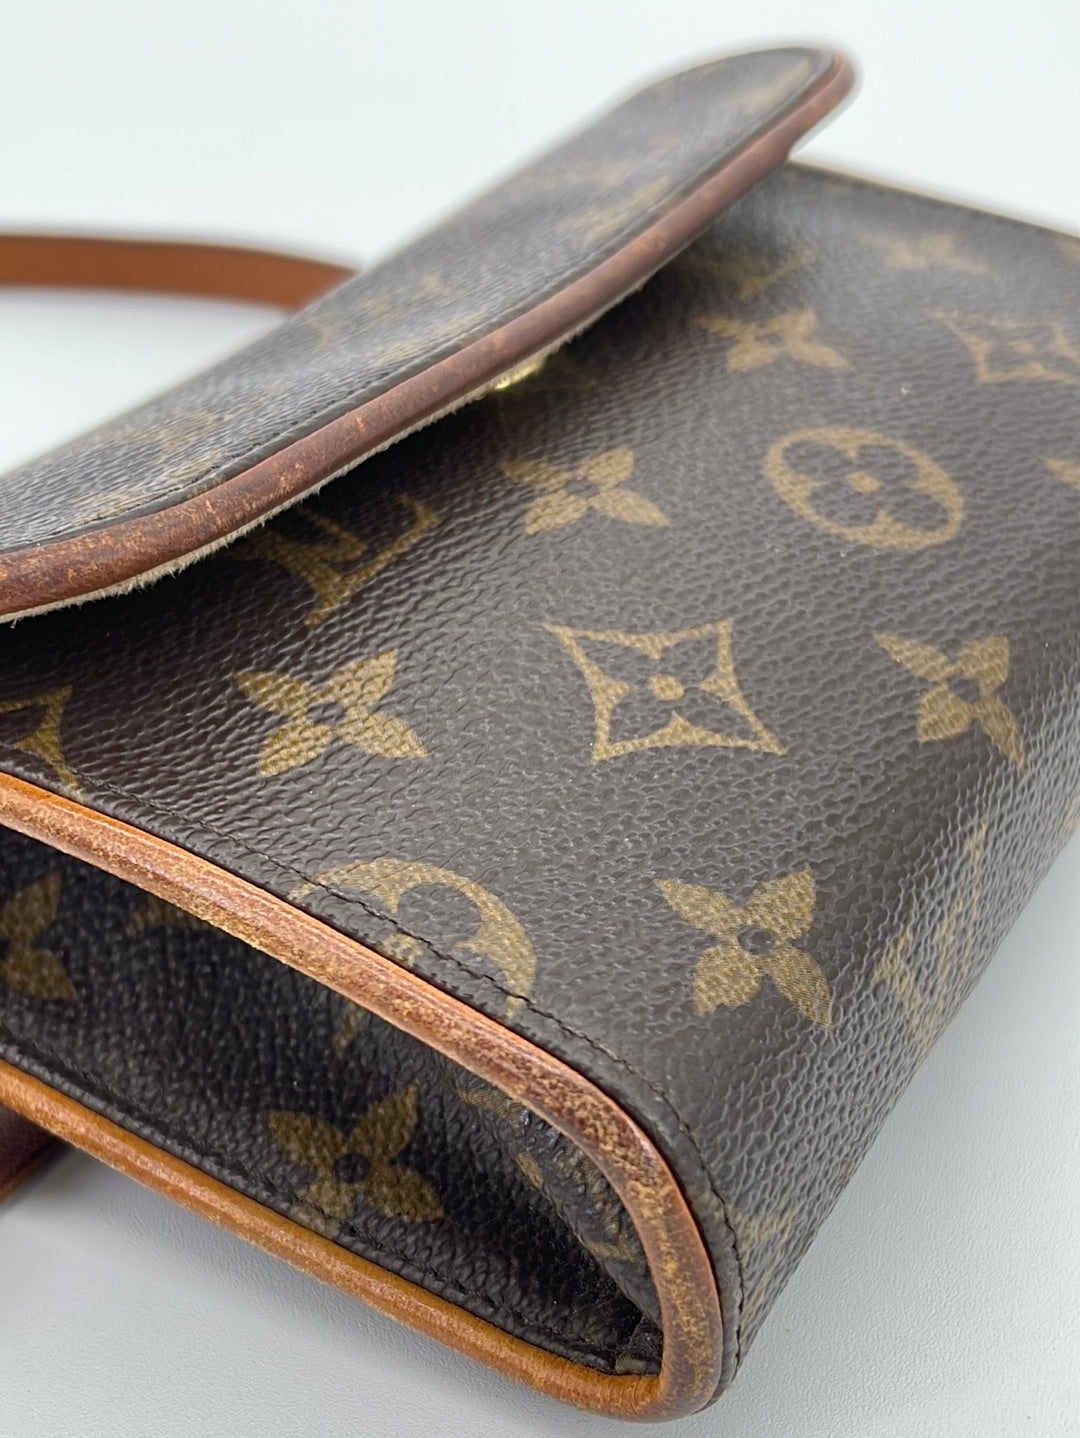 Louis Vuitton Pre Owned pre-owned monogram Florentine belt bag - ShopStyle